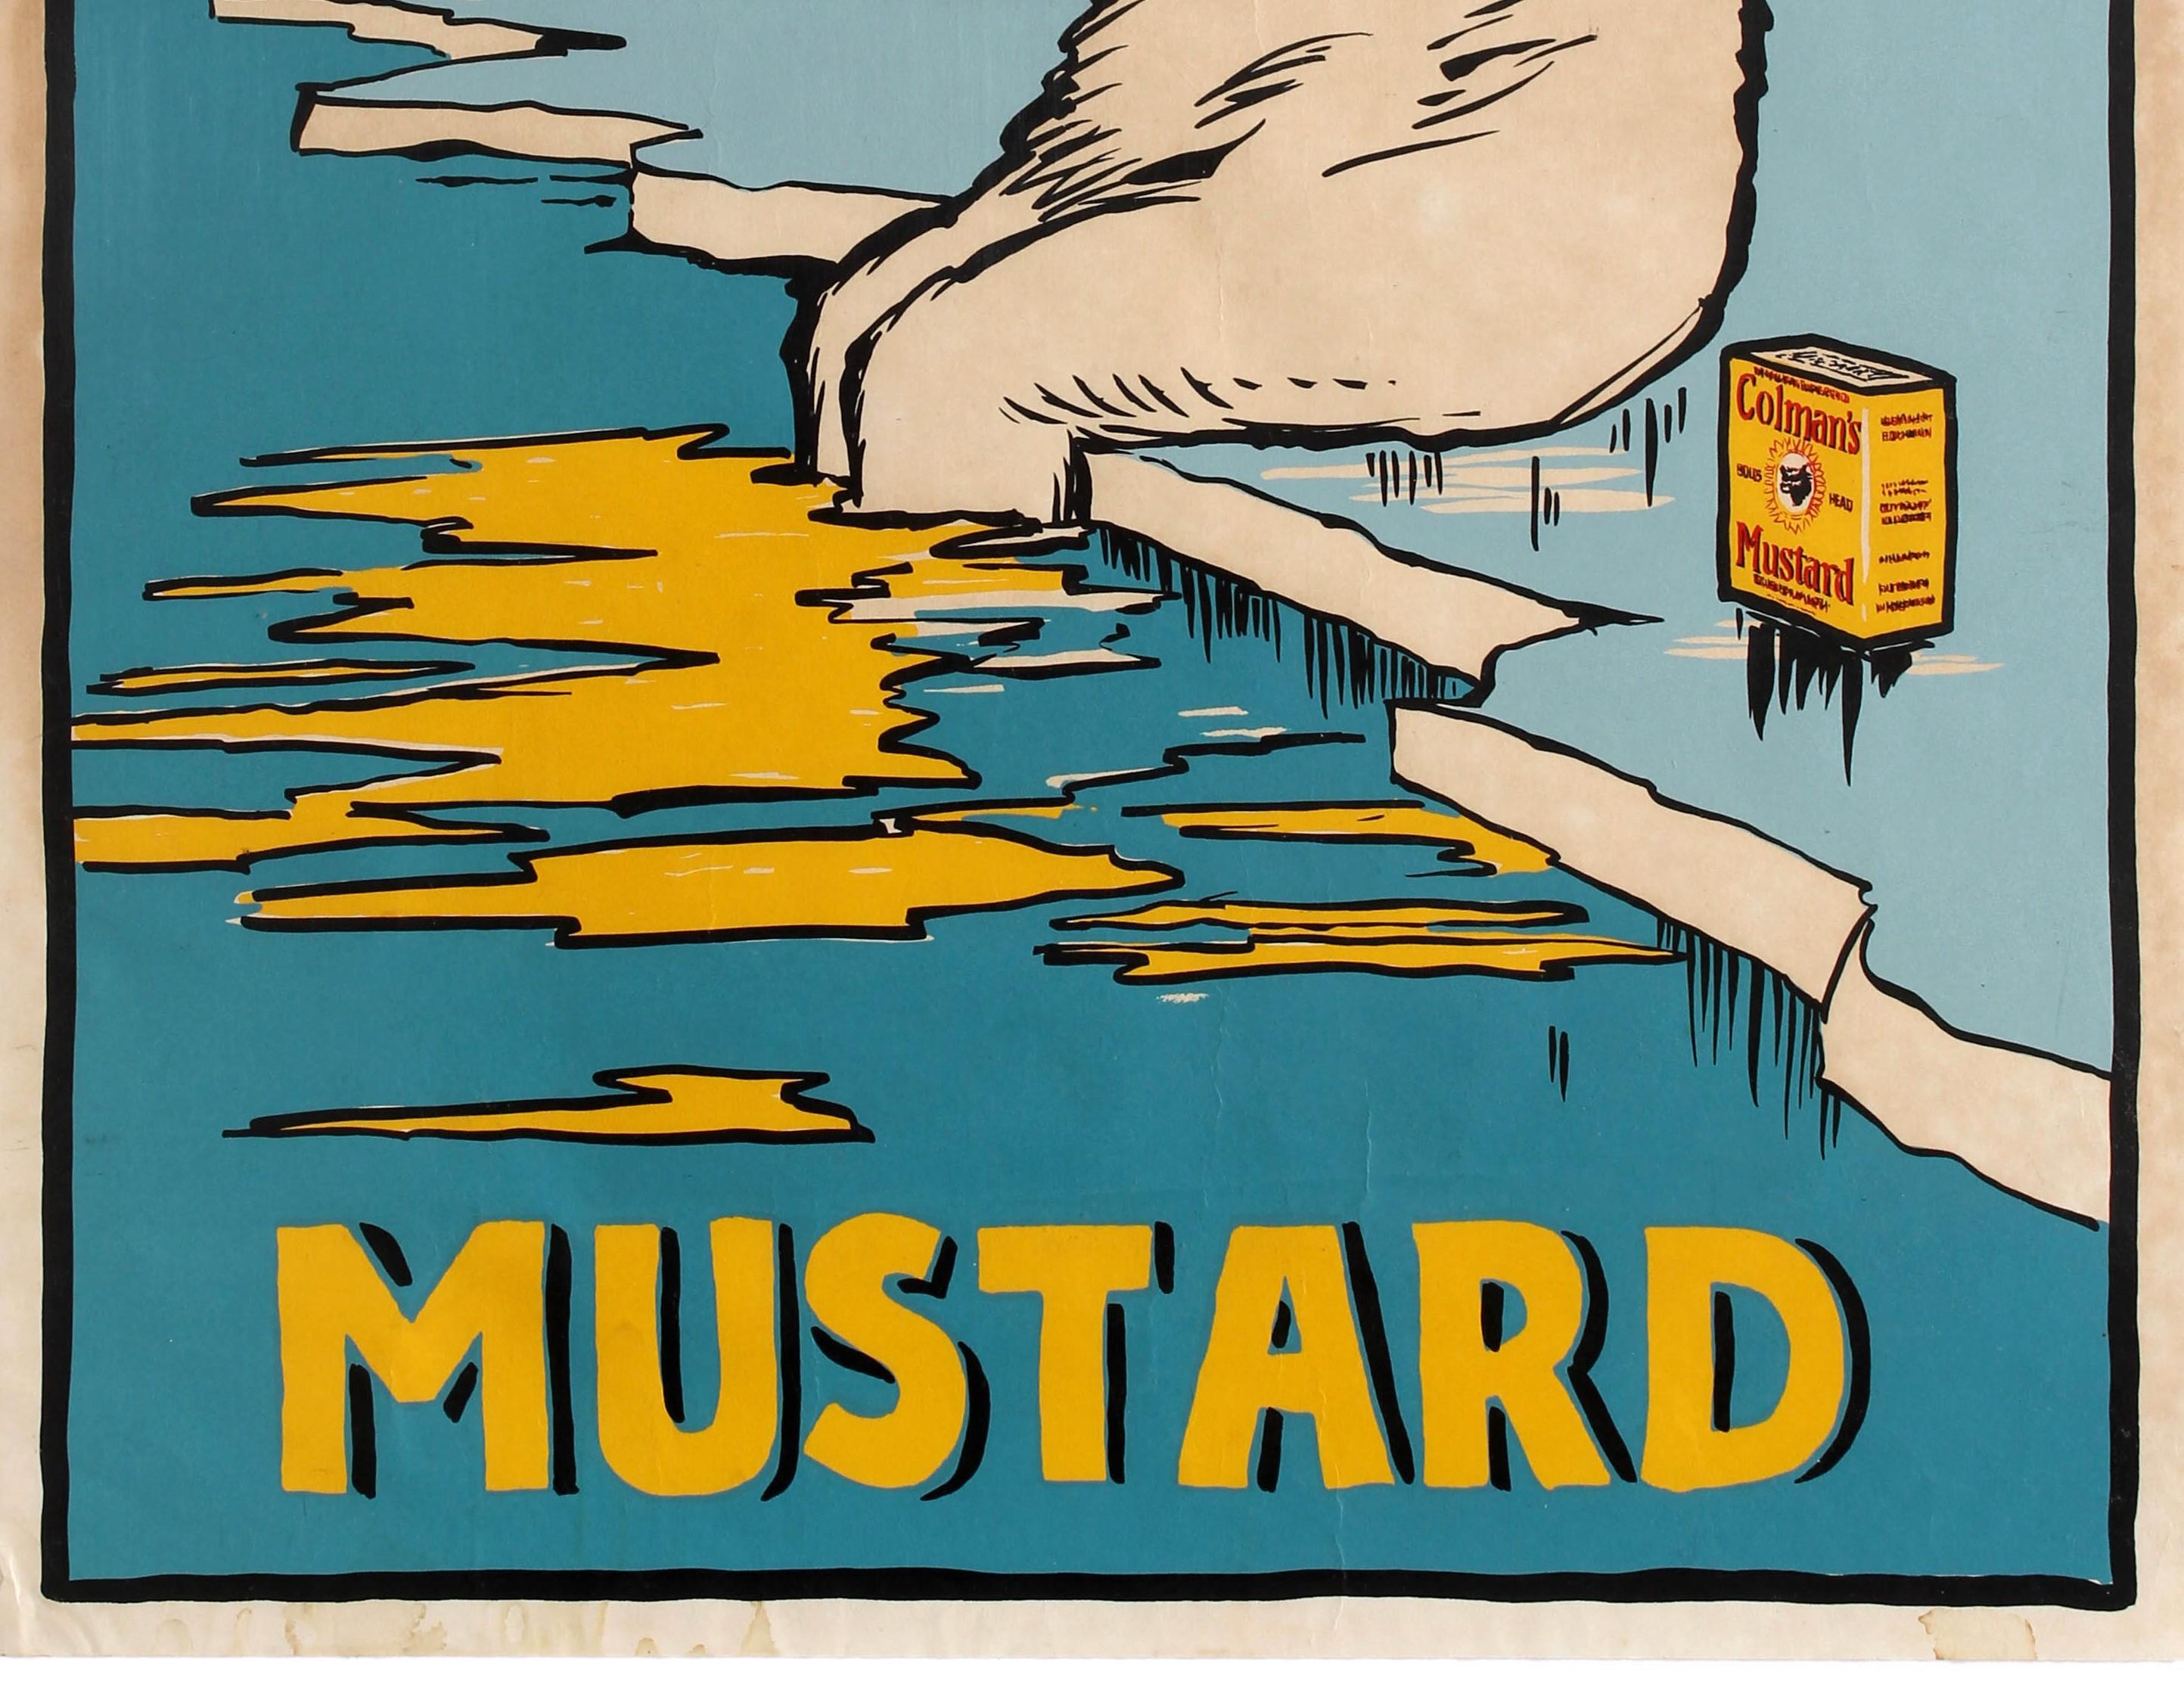 colman's mustard poster